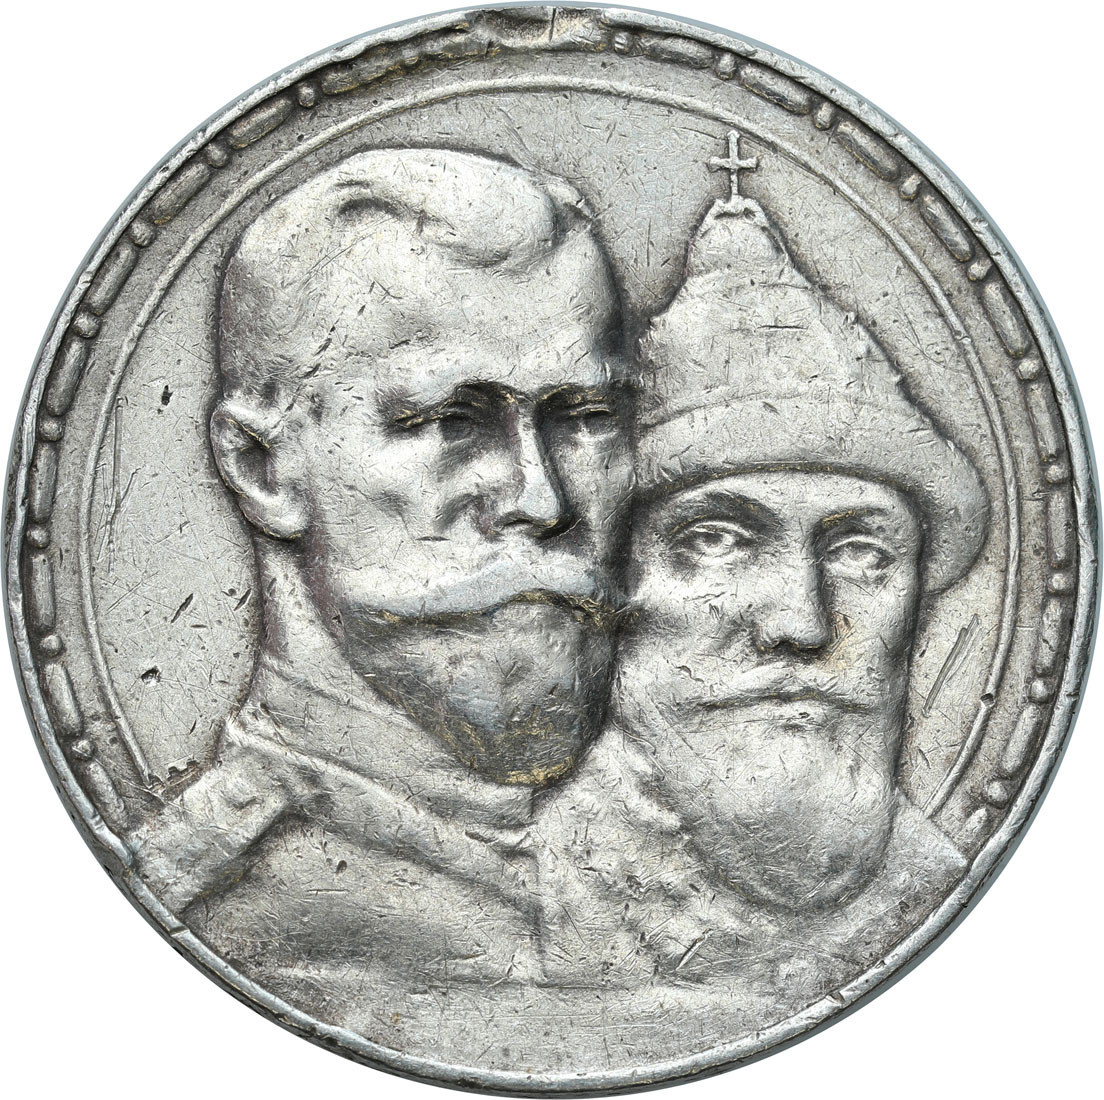 Rosja. Rubel 1913, Petersburg (stempel głęboki) - 300-lecie Dynastii Romanowów